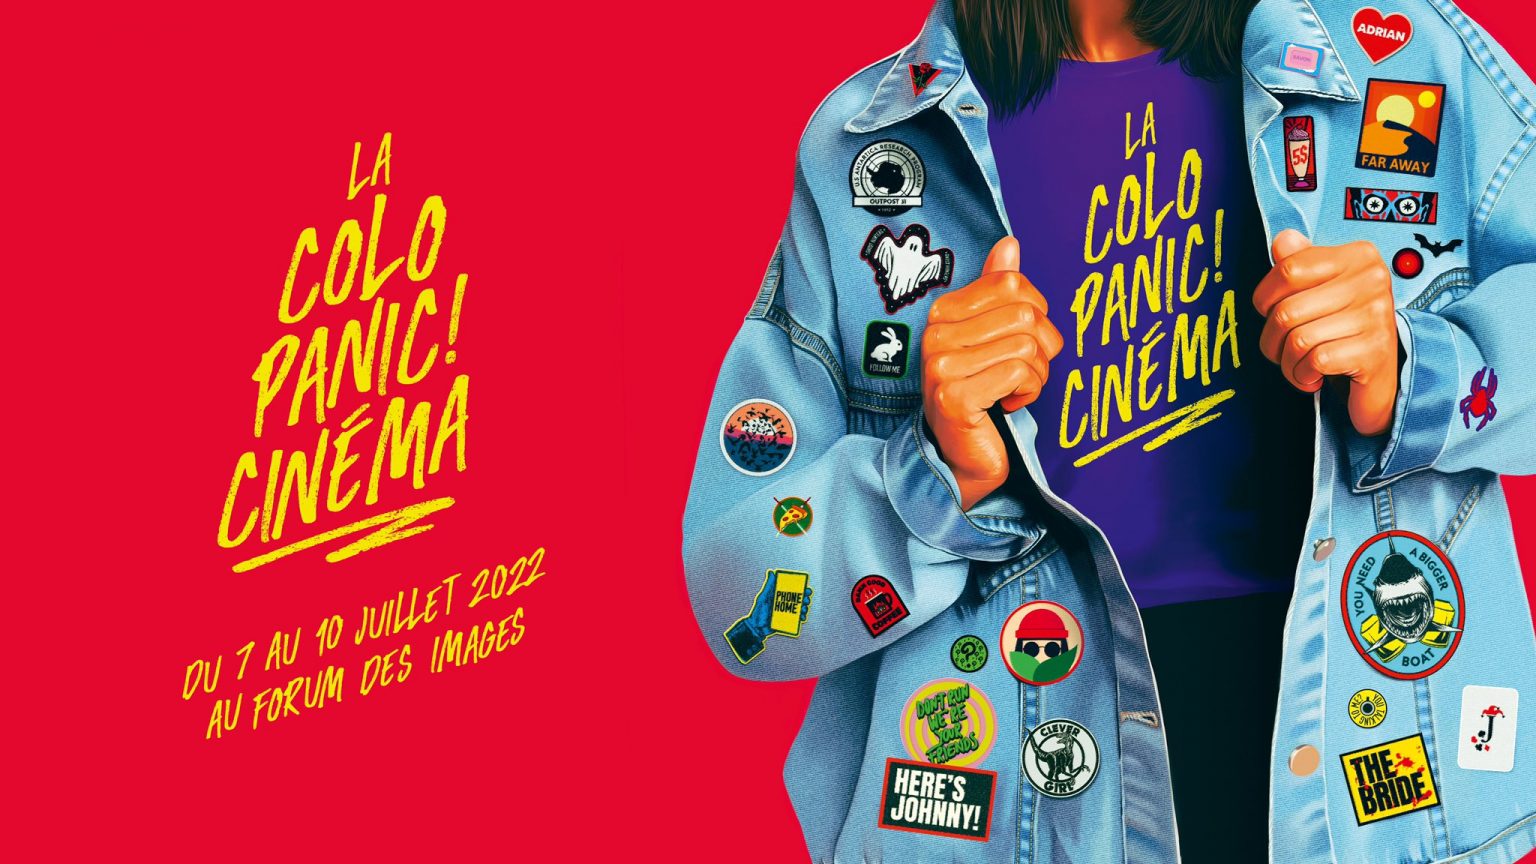 La Colo Panic Cinéma Poster.jpg